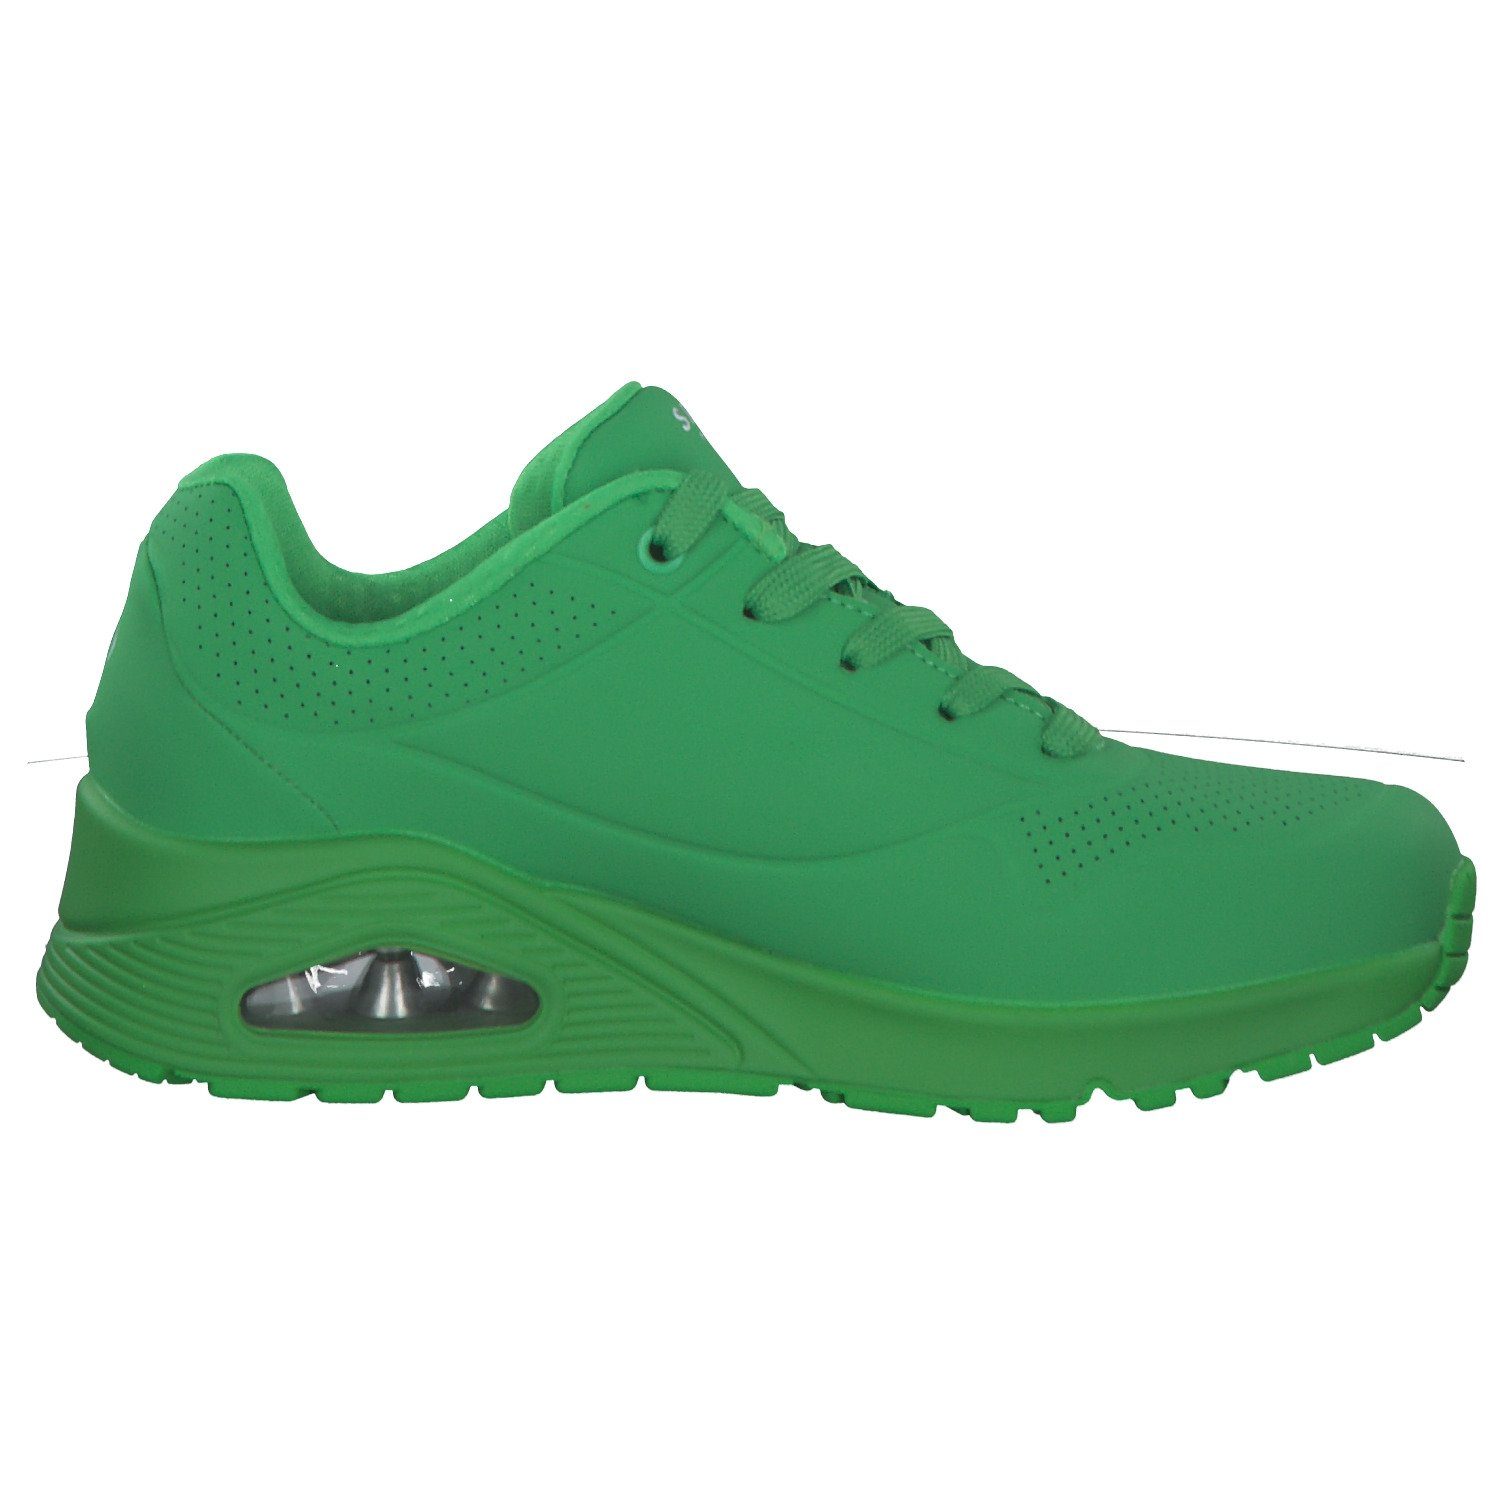 Stand 73690 Skechers On Skechers Air Green Uno (20203098) Sneaker